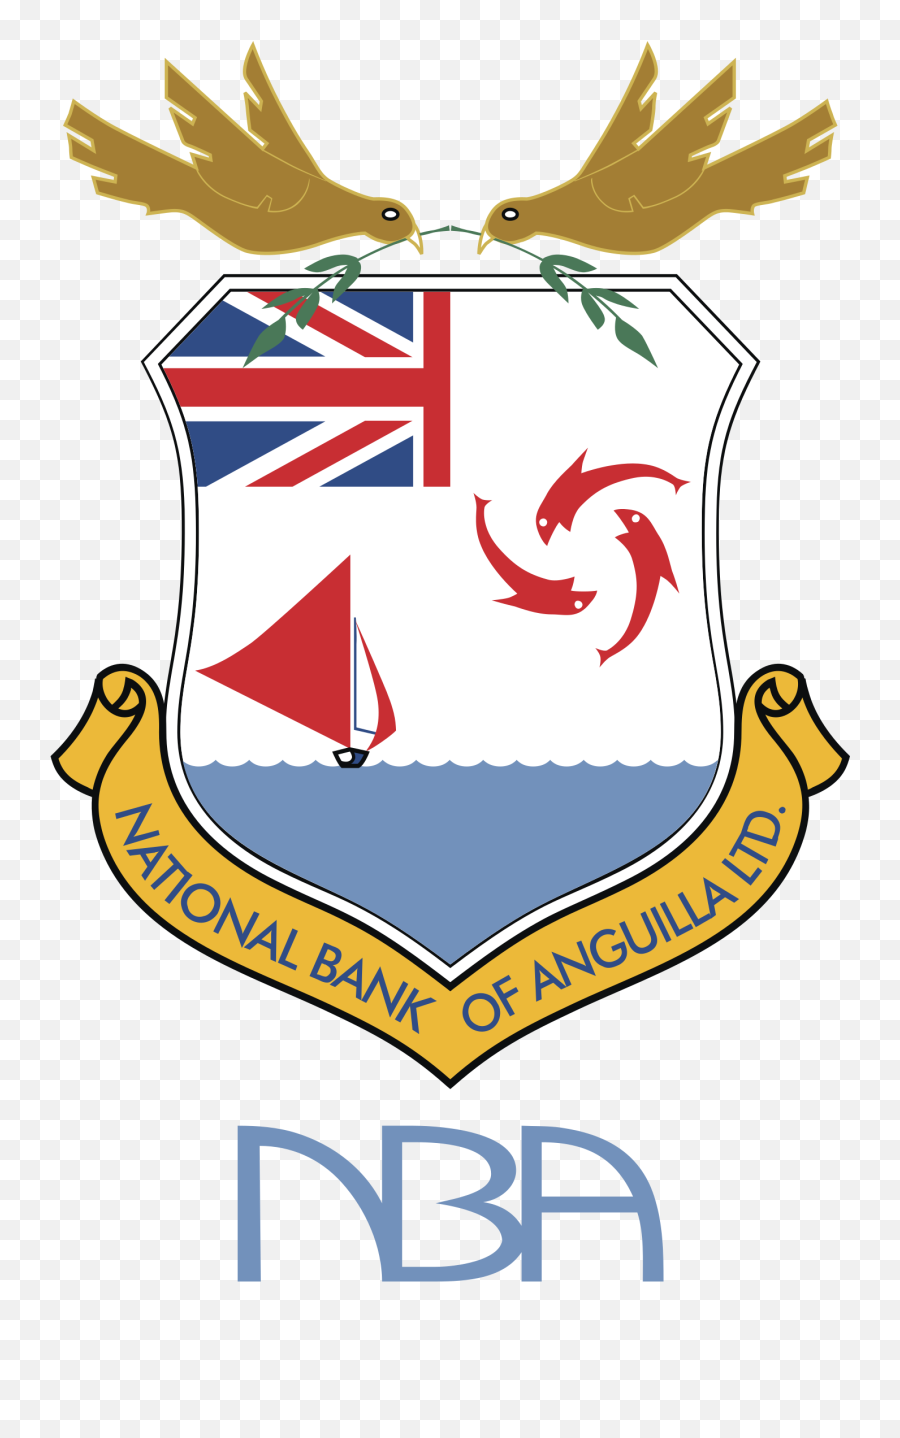 Nba Logo Png Transparent U0026 Svg Vector - Freebie Supply National Bank Of Anguilla,All Nba Logos